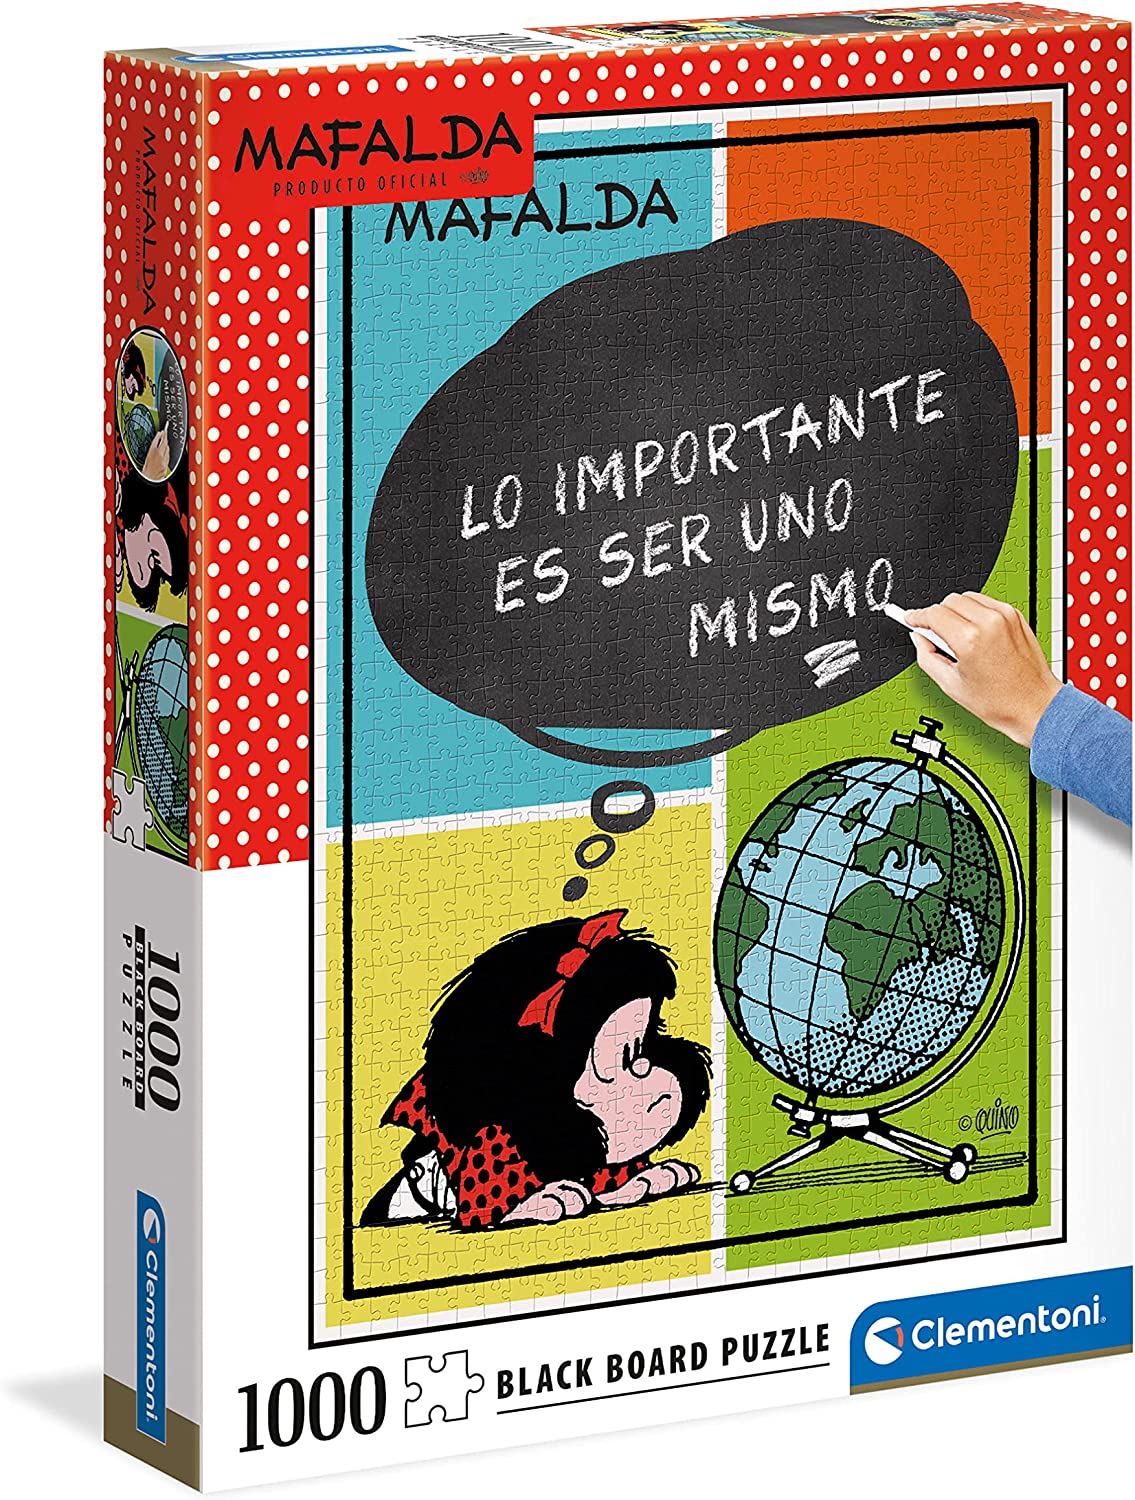 Puzzle 1000 Pezzi Blackboard Mafalda CLEMENTONI toysvaldichiana.it 